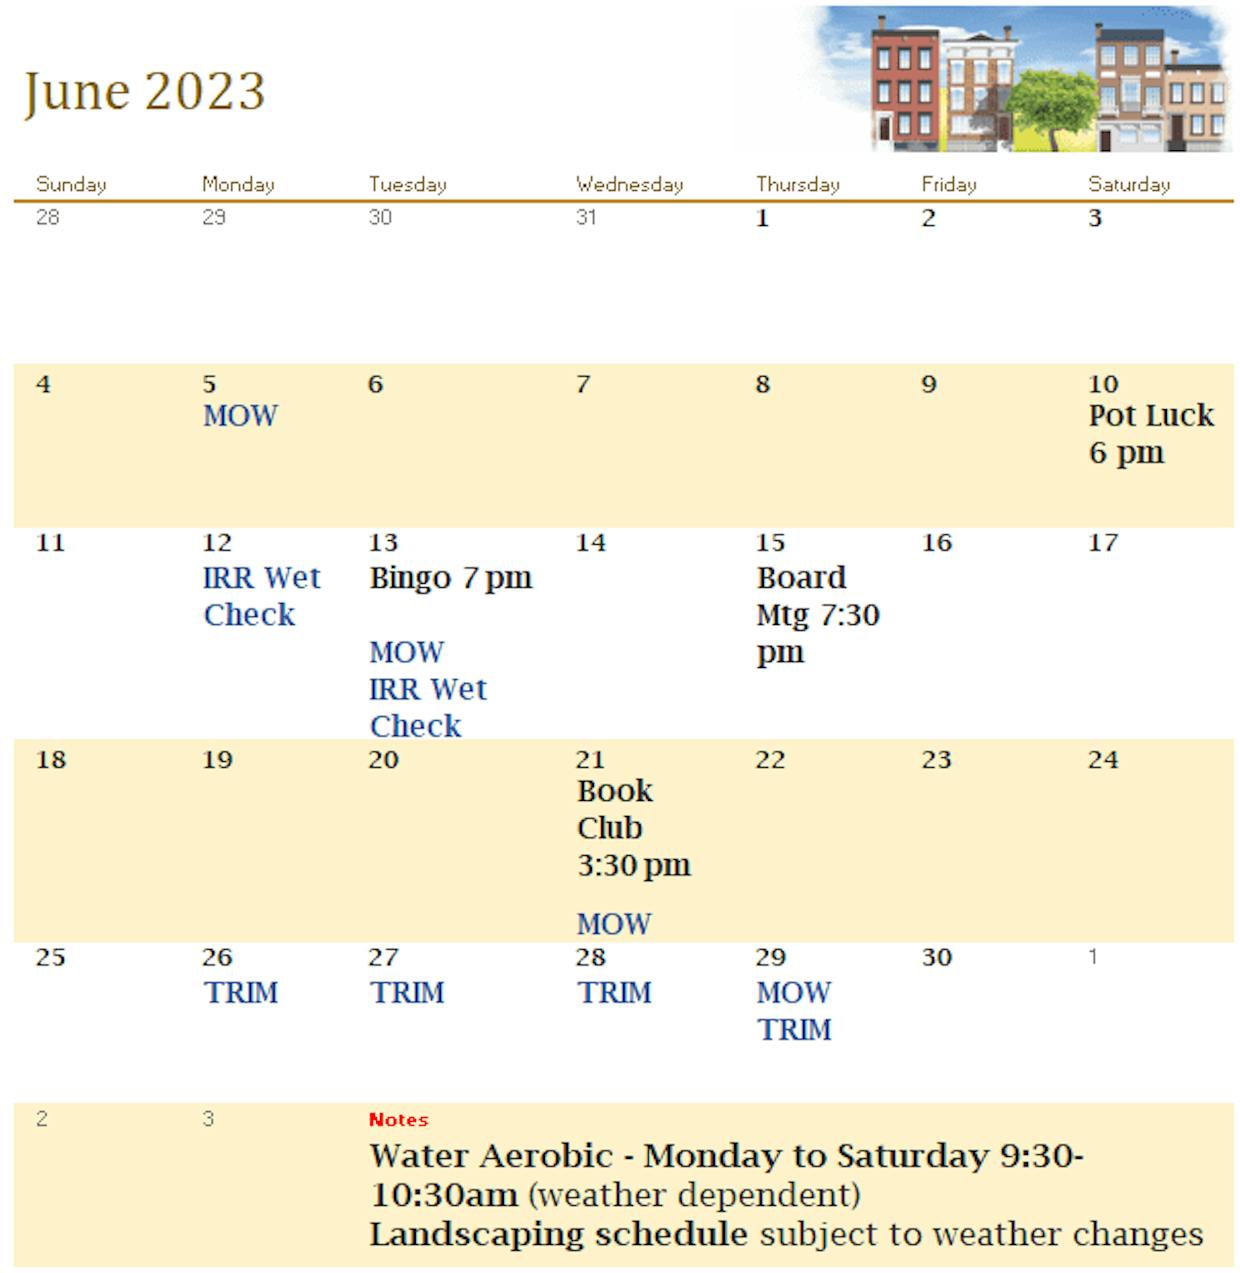 June 2023 Scheduled Events